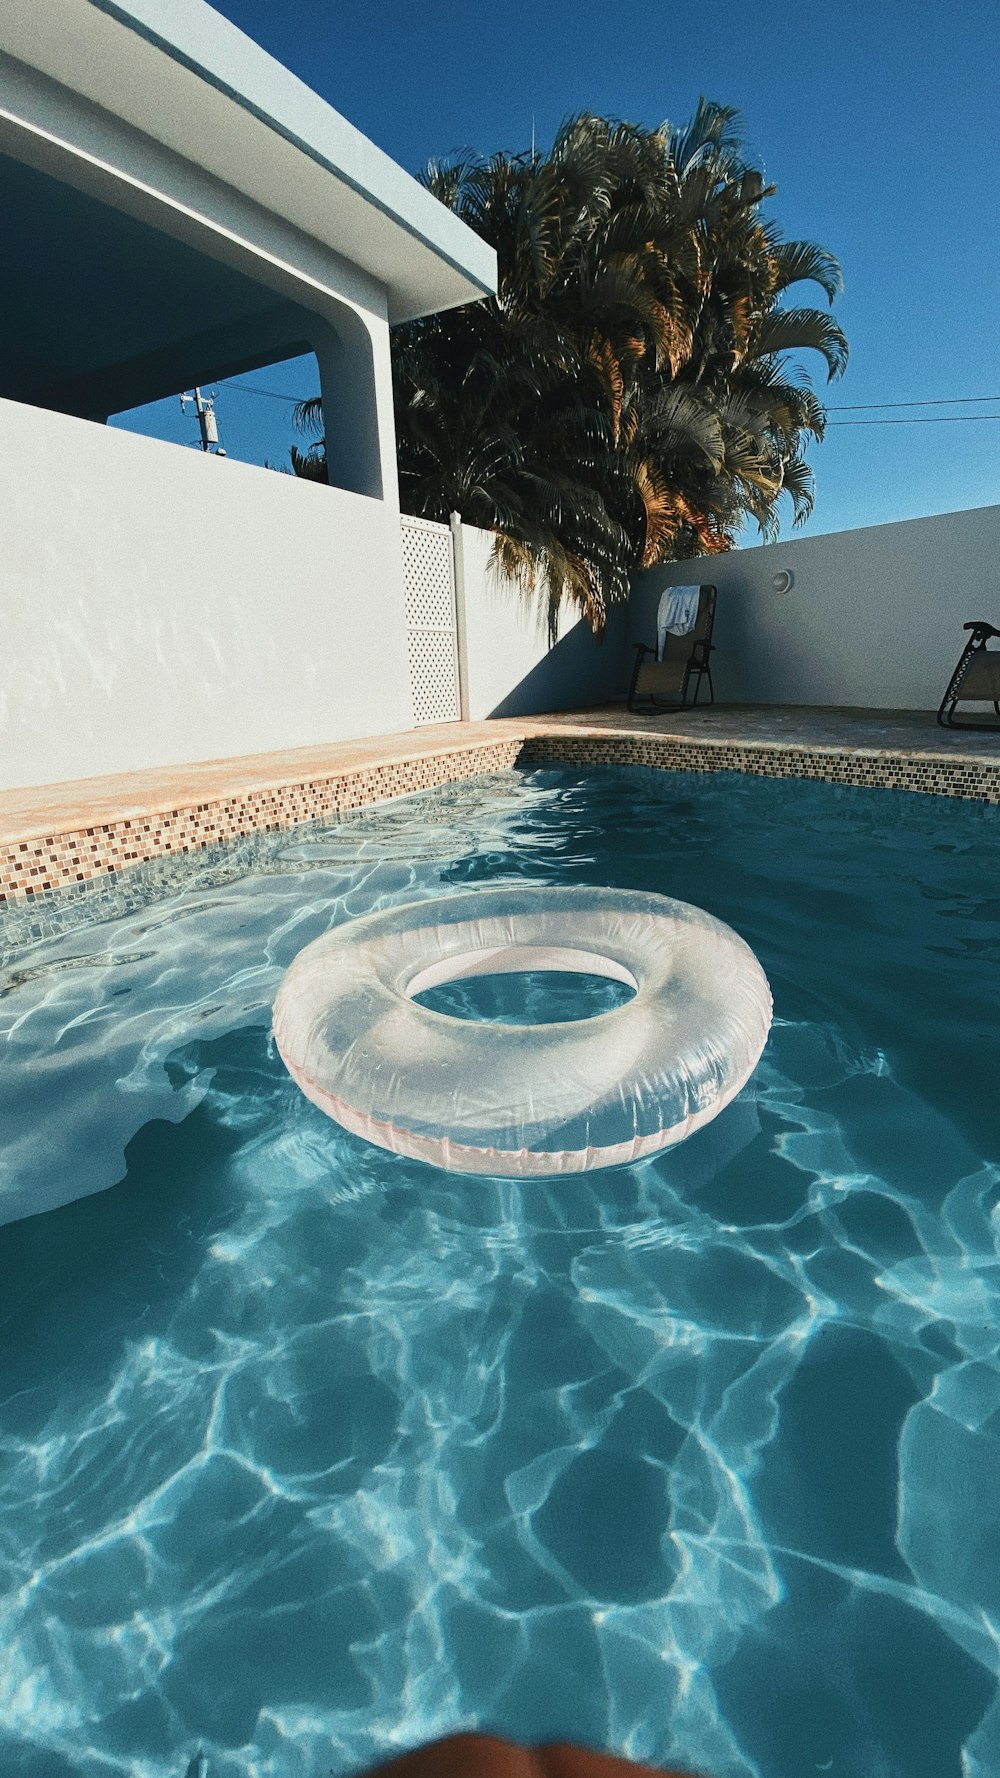 white life donut on swimming pool